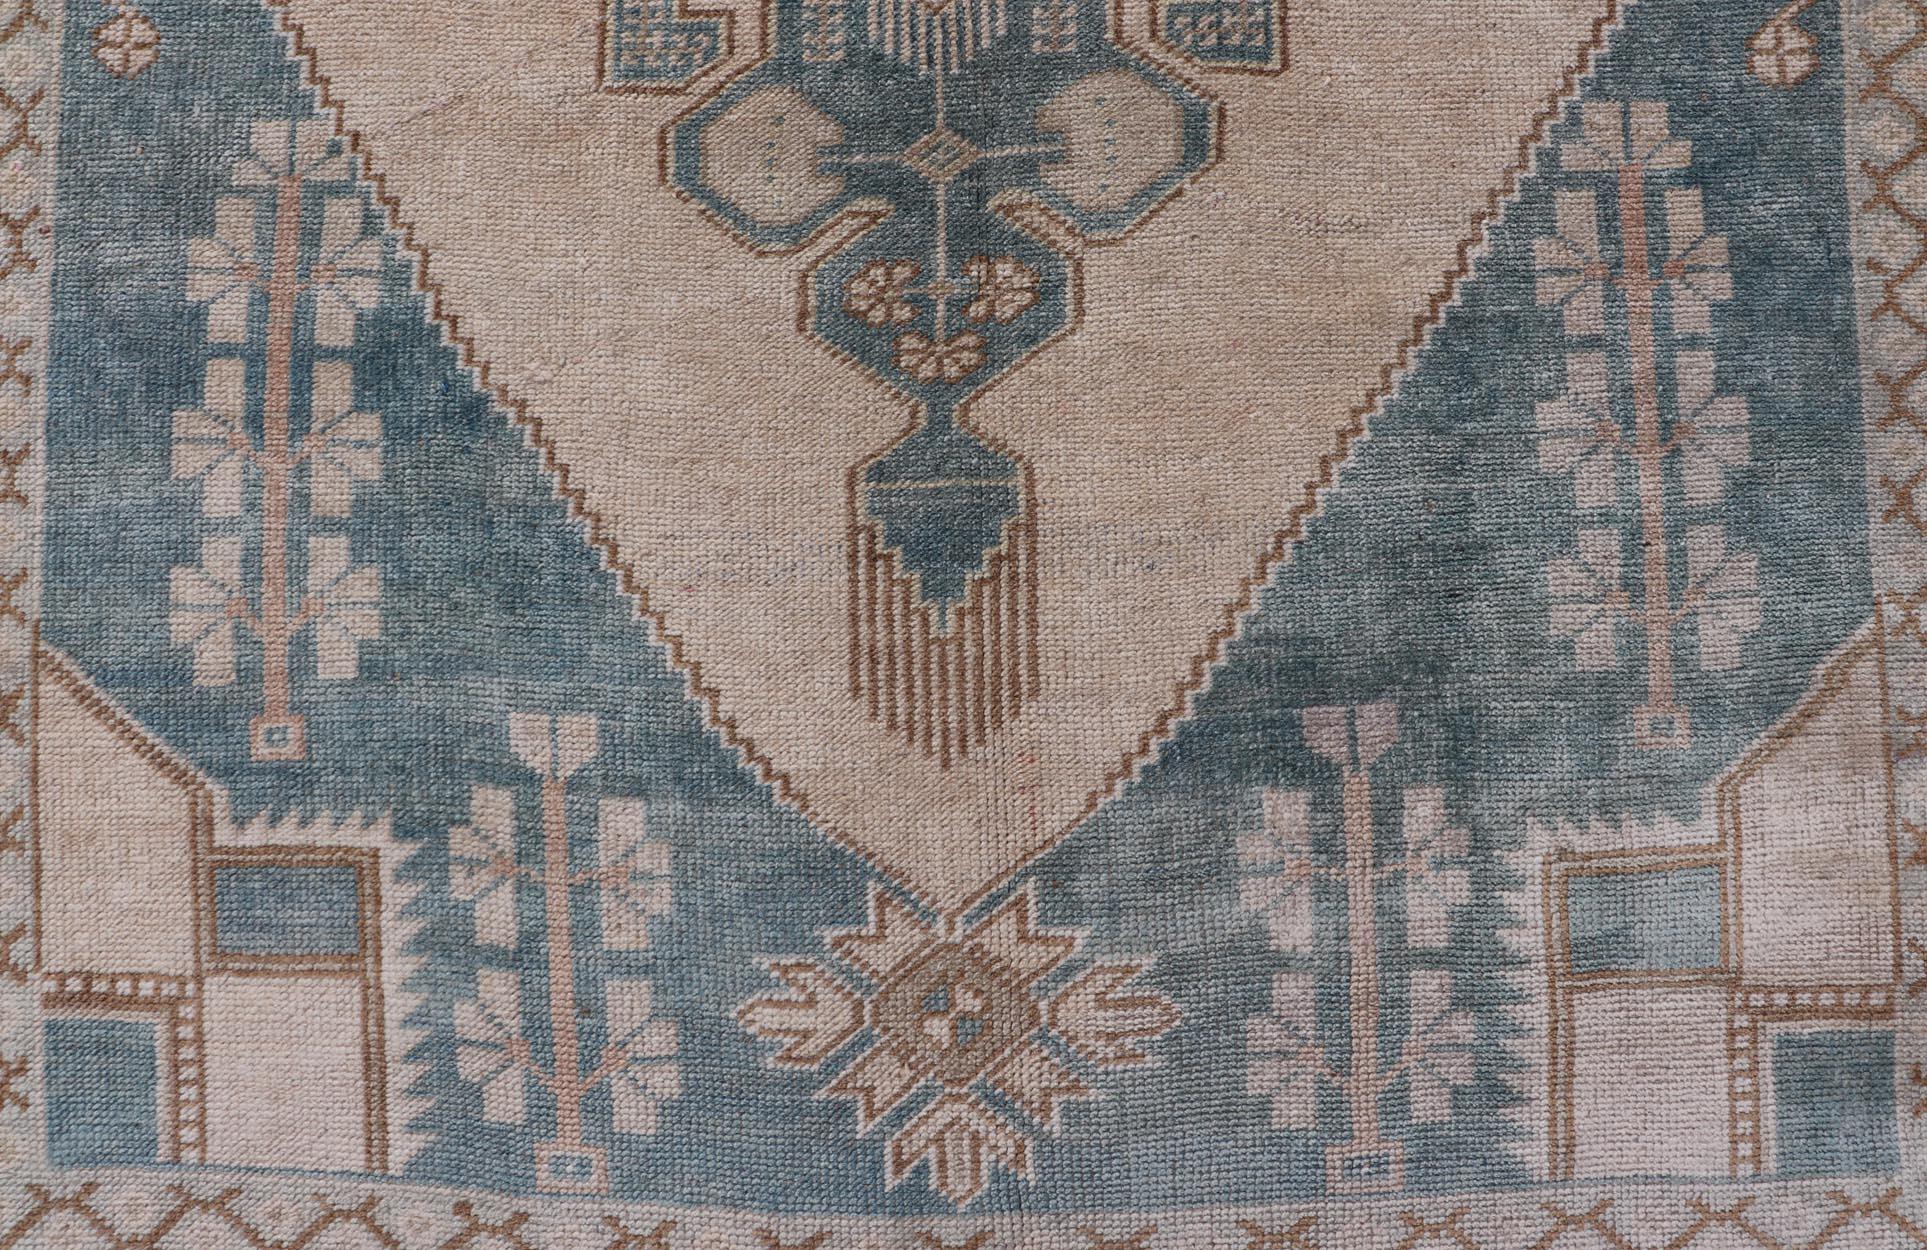 Vintage hand knotted Oushak carpet from Turkey in blue and cream tones, Keivan Woven Arts / rug TU-MTU-4869, country of origin / type: Turkey / Oushak, circa 1940


Measures: 5'9 x 10'4.